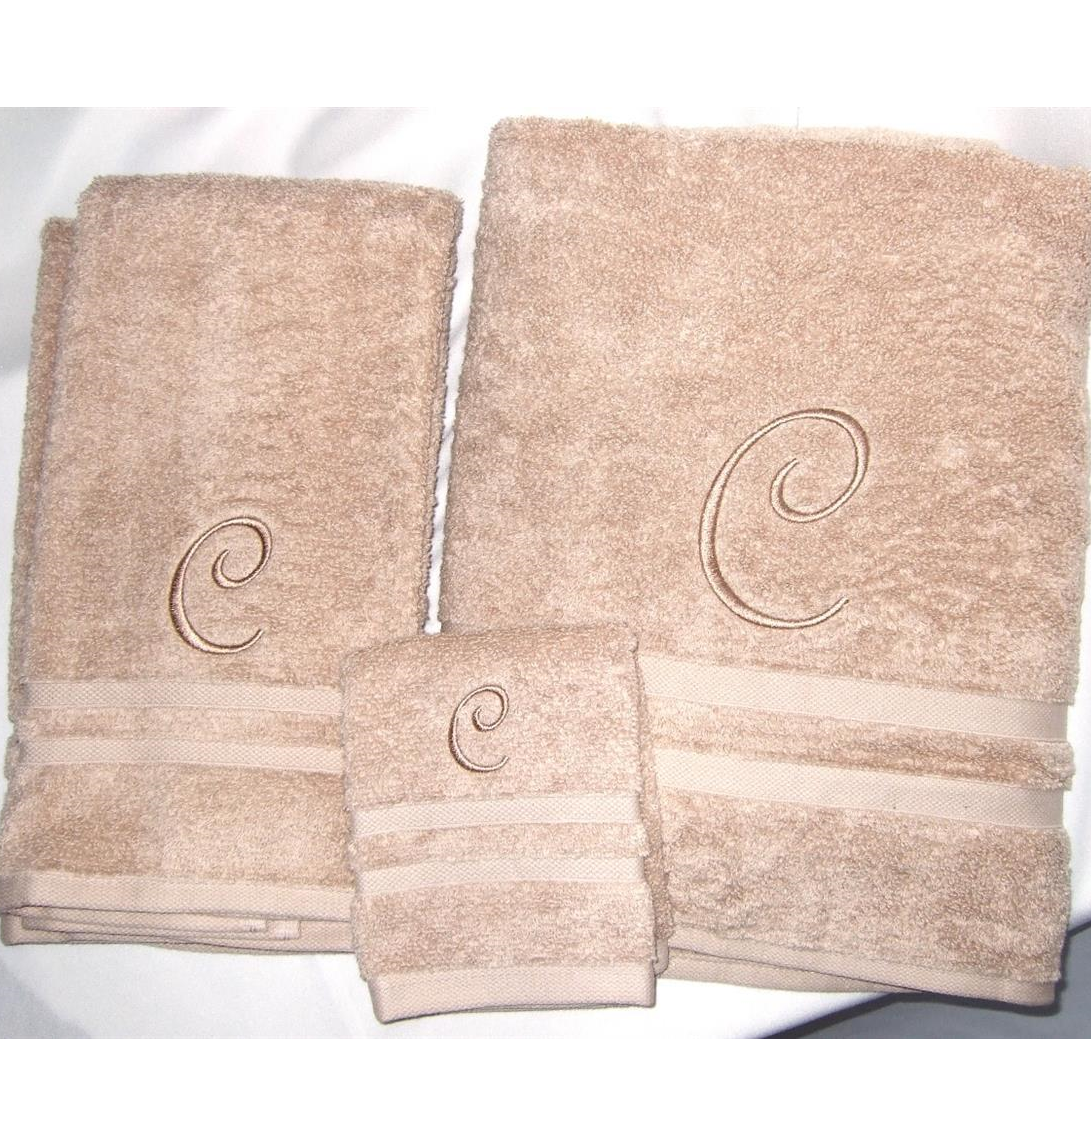 Monogrammed  towel set